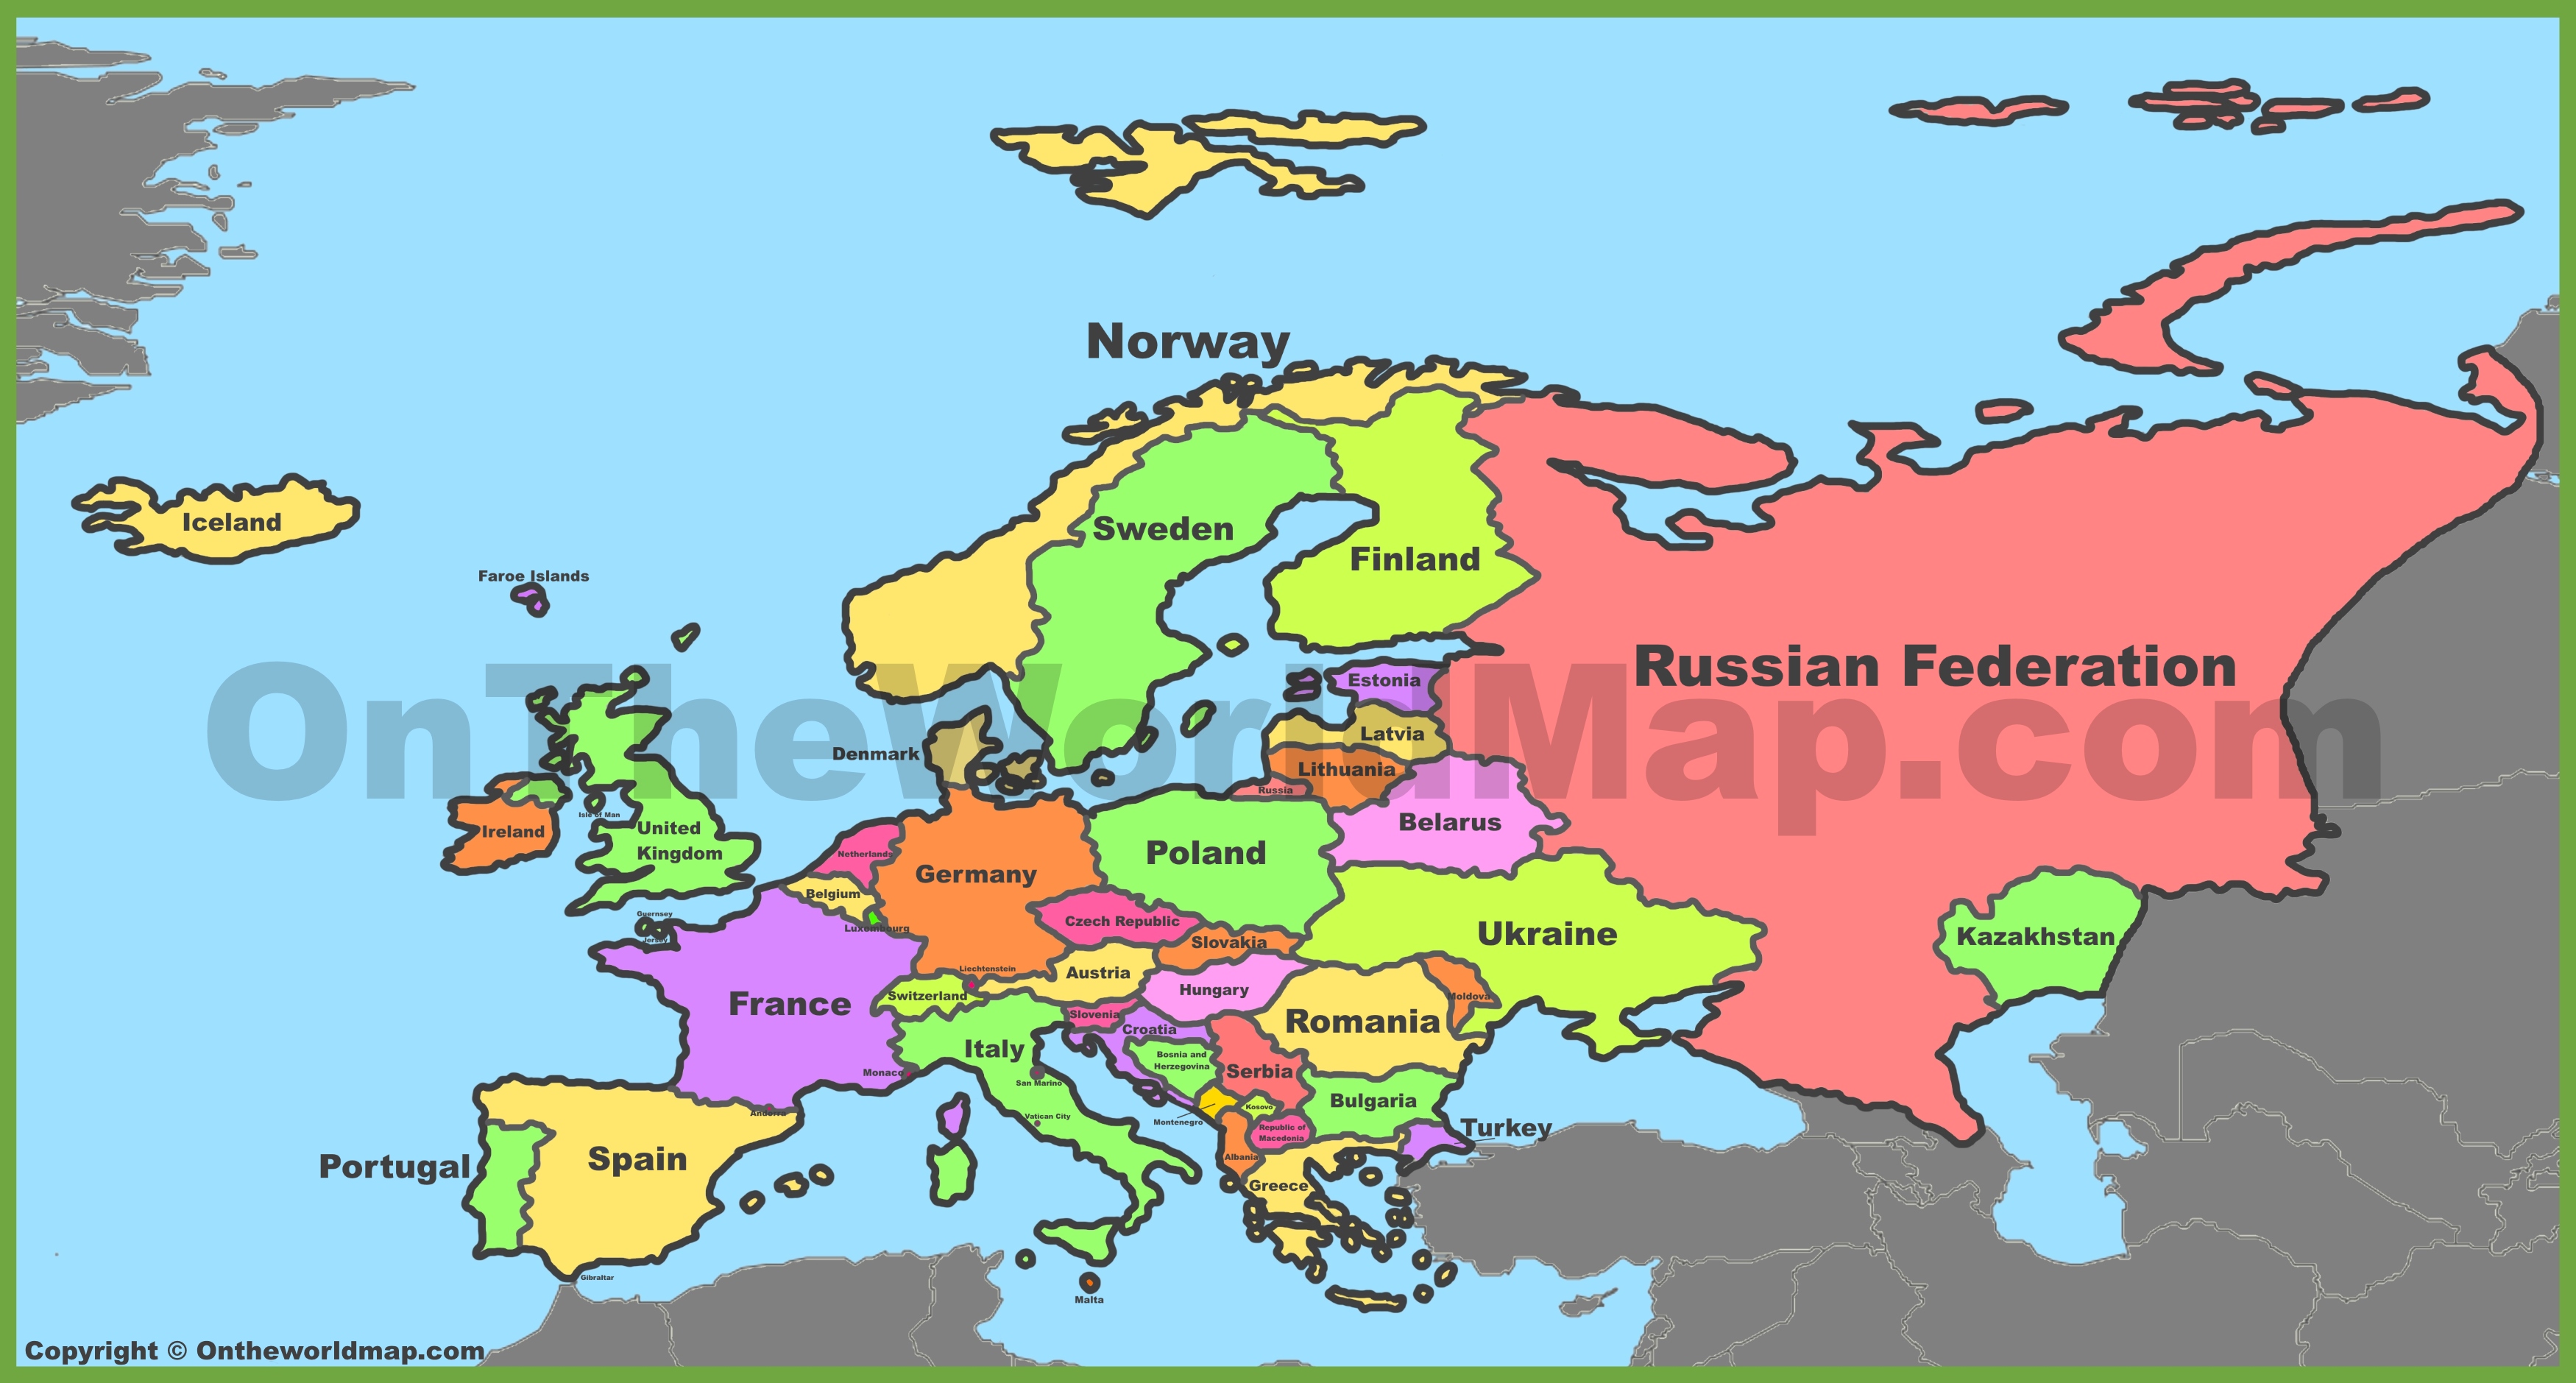 Europe Map Maps Of Europe